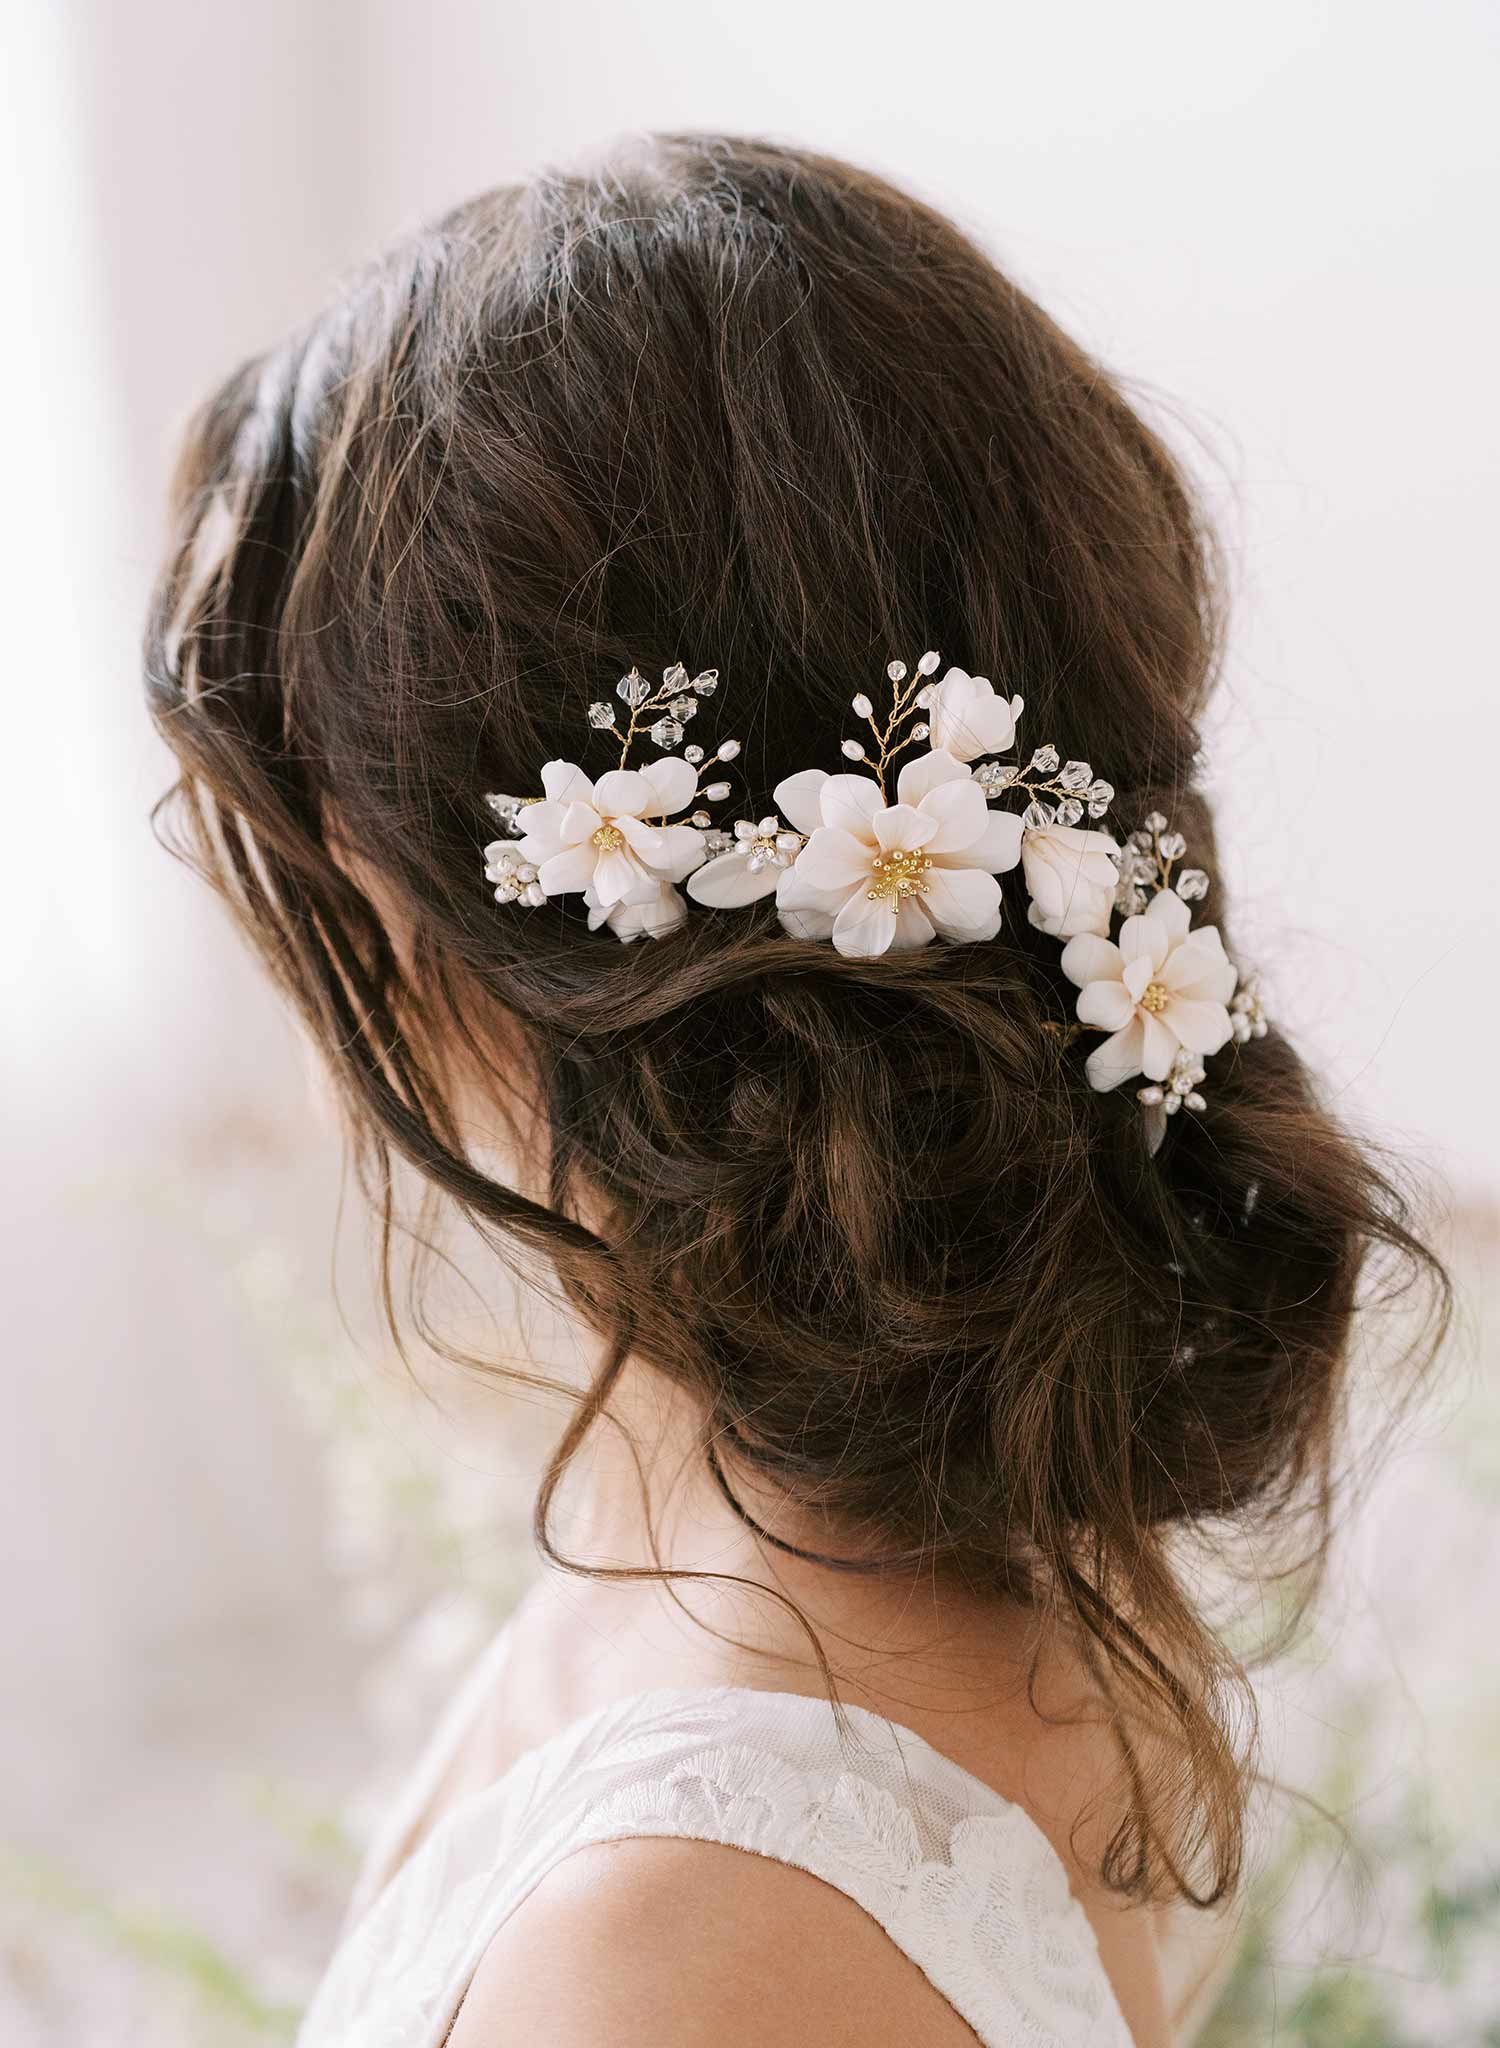 flower hair accessories for women